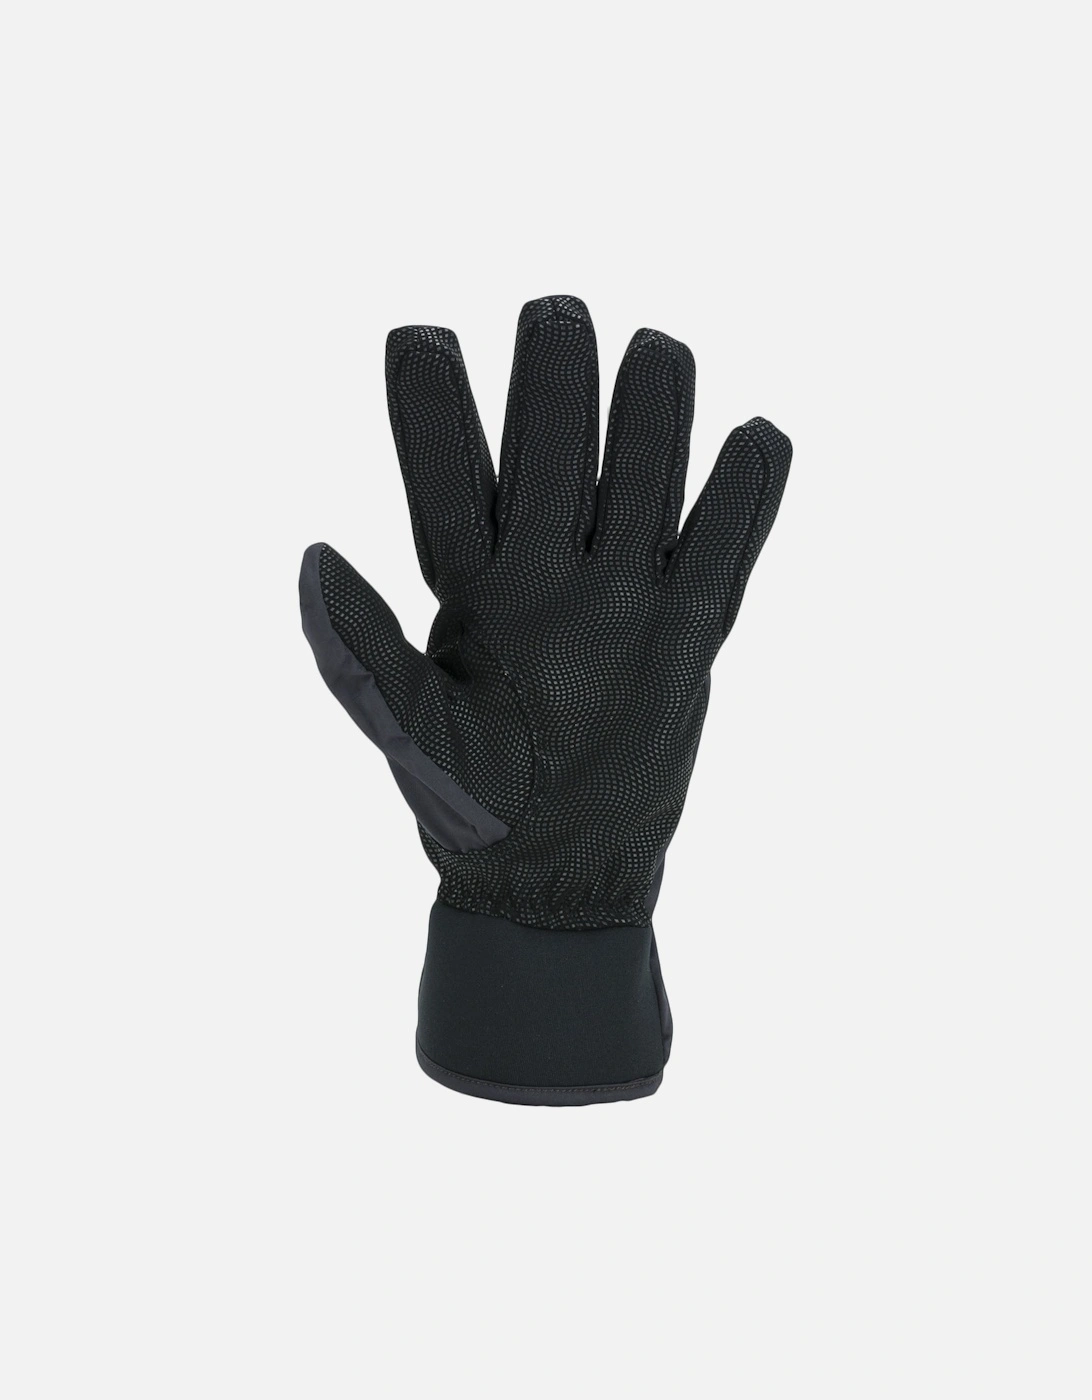 Waterproof All Weather Gloves - Black